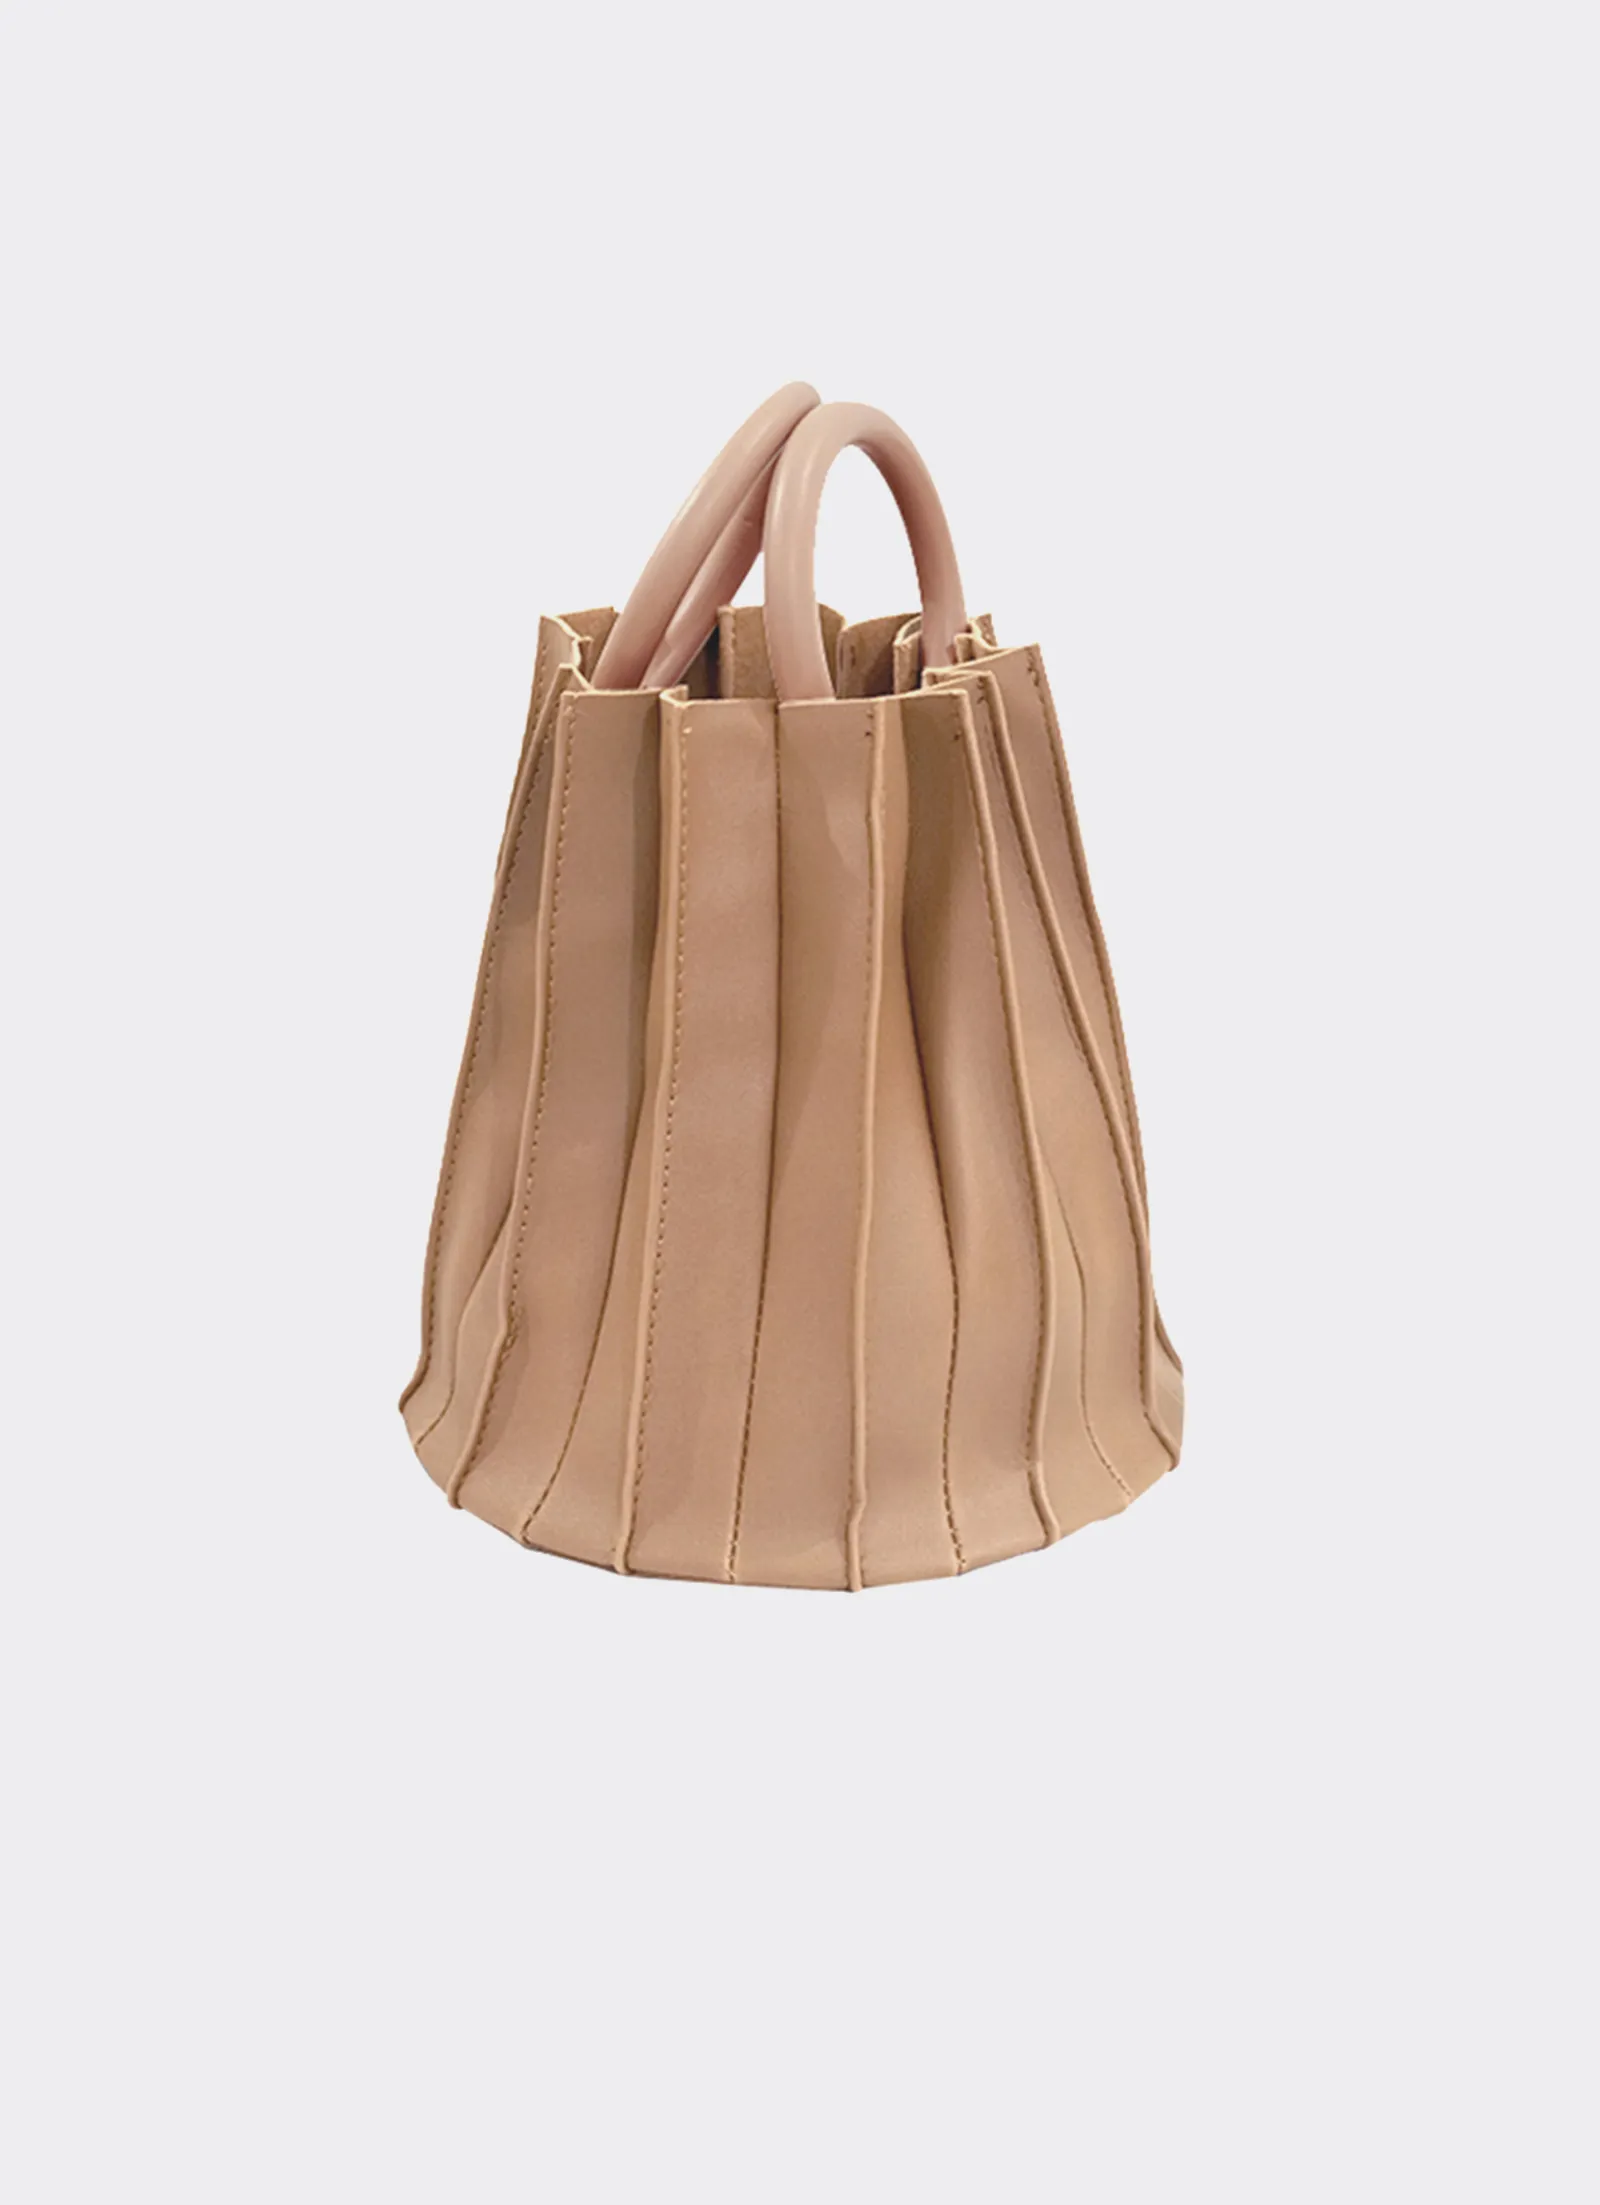 #PopbelaOOTD: Rekomendasi Bucket Bag dari Brand Lokal